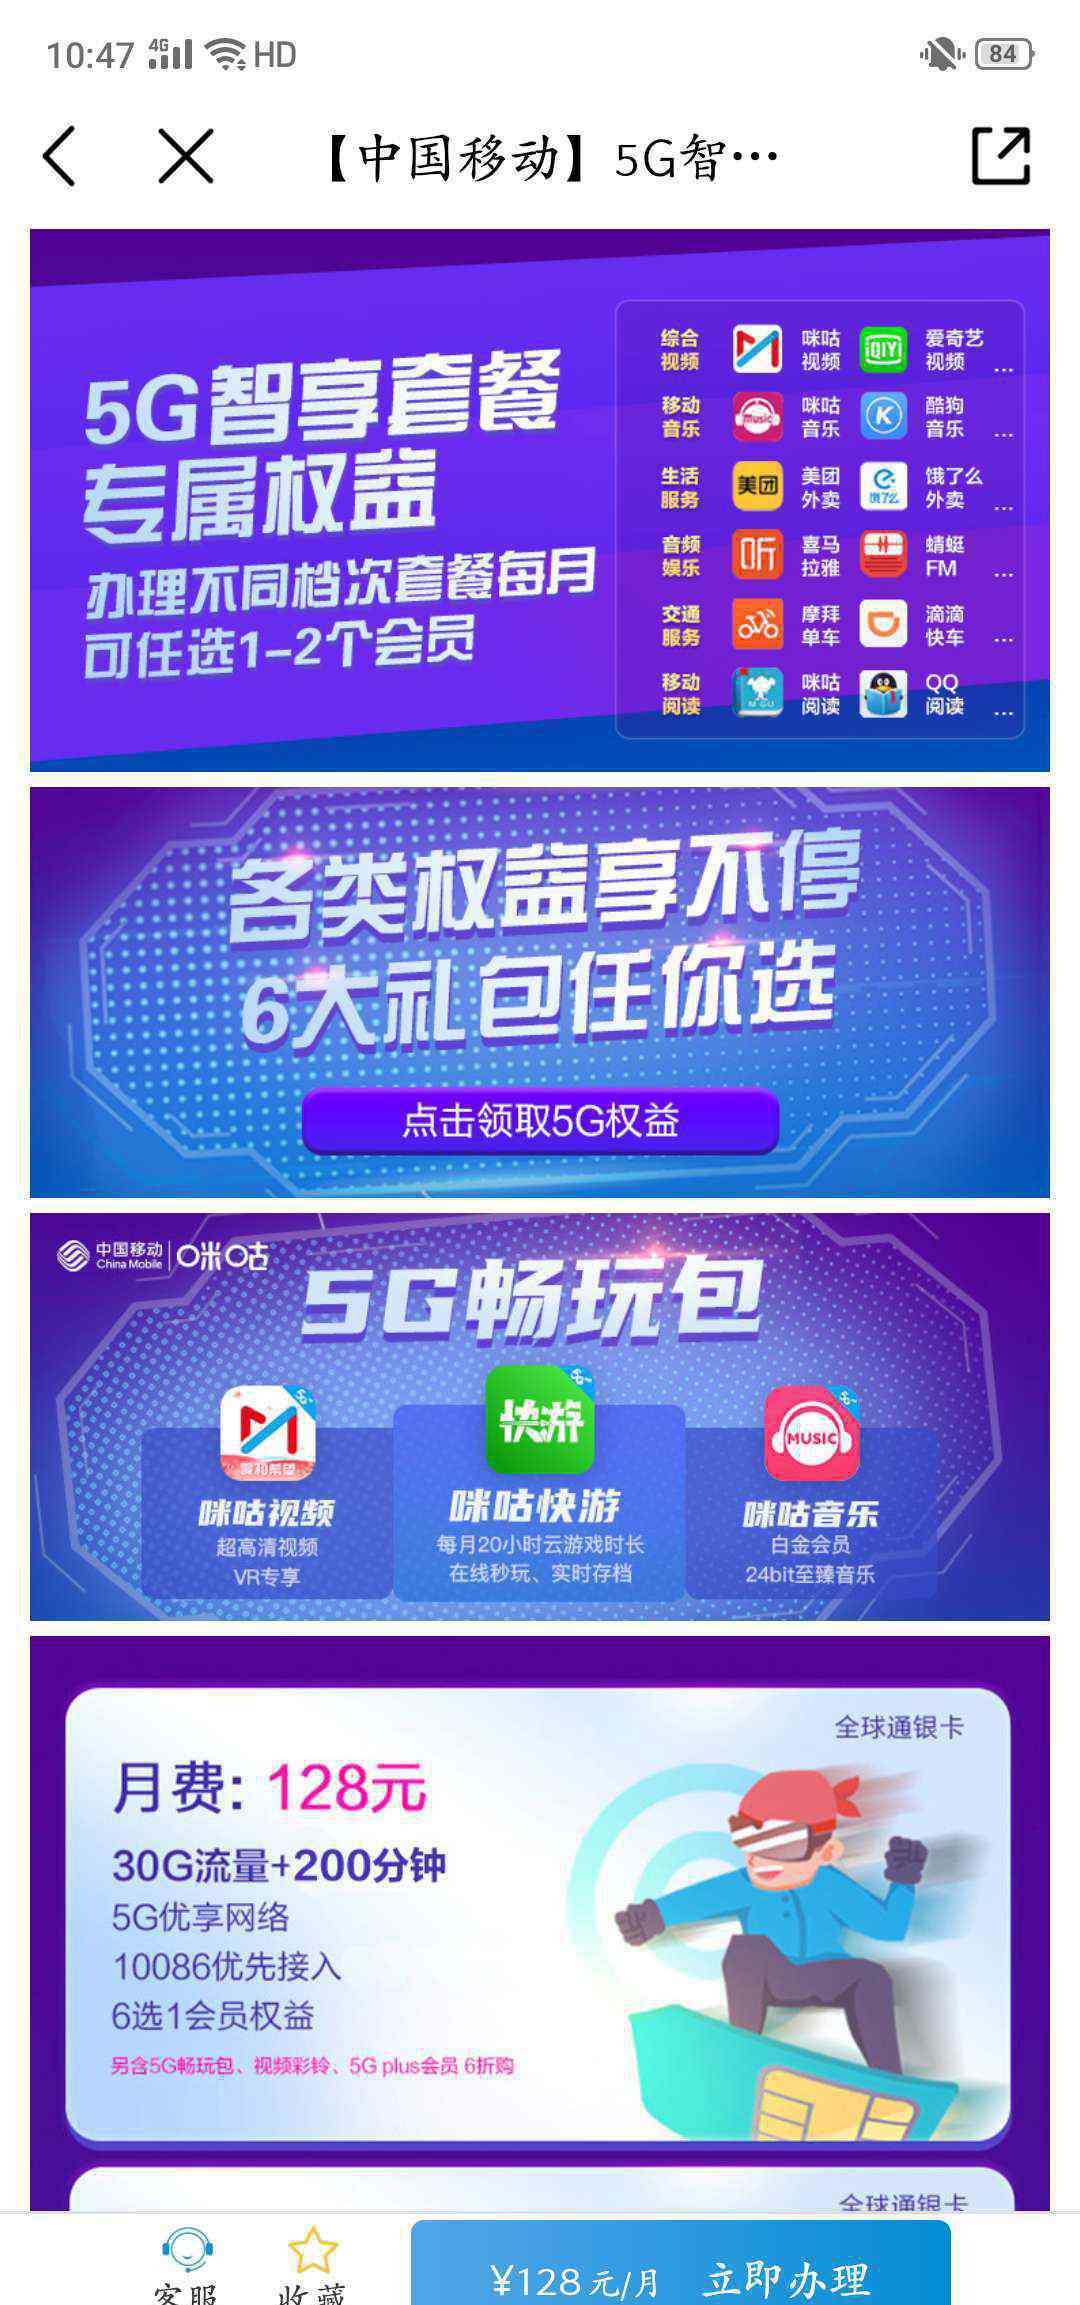 50g 中国移动20周年感恩回馈，用户凭网龄可领50G流量与多重权益！